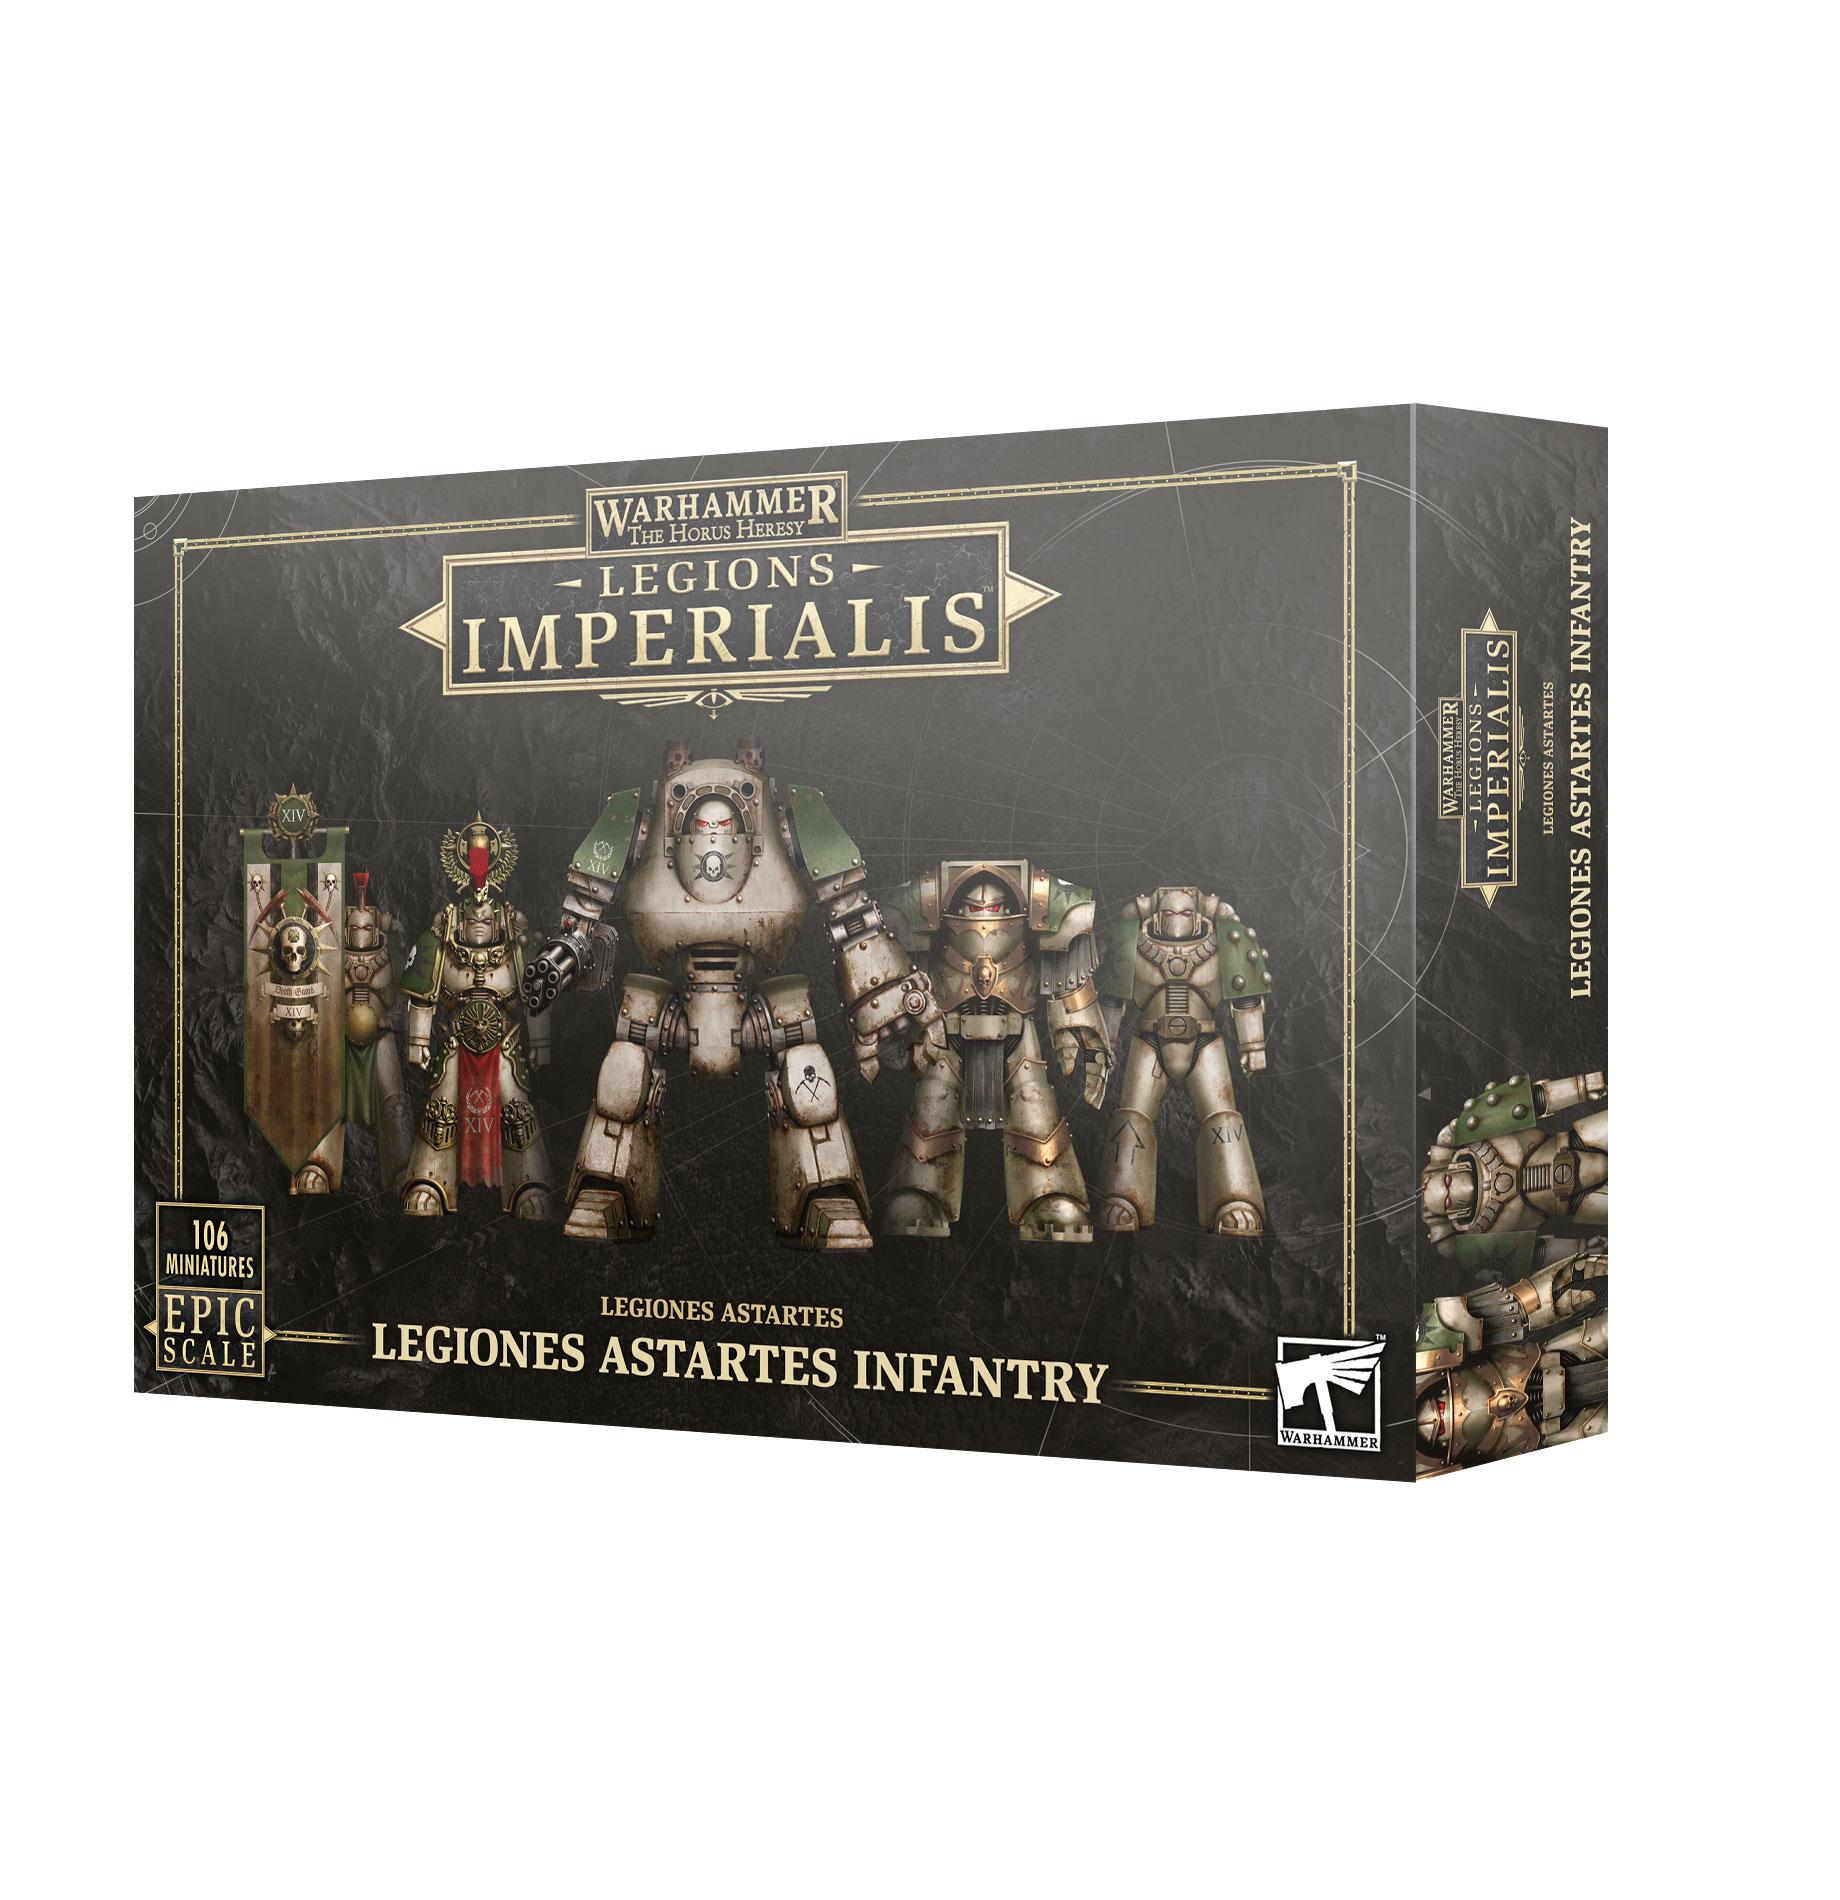 Warhammer 40,000: The Horus Heresy - Legions Imperialis: Legiones Astartes, Legiones Astartes Infantry